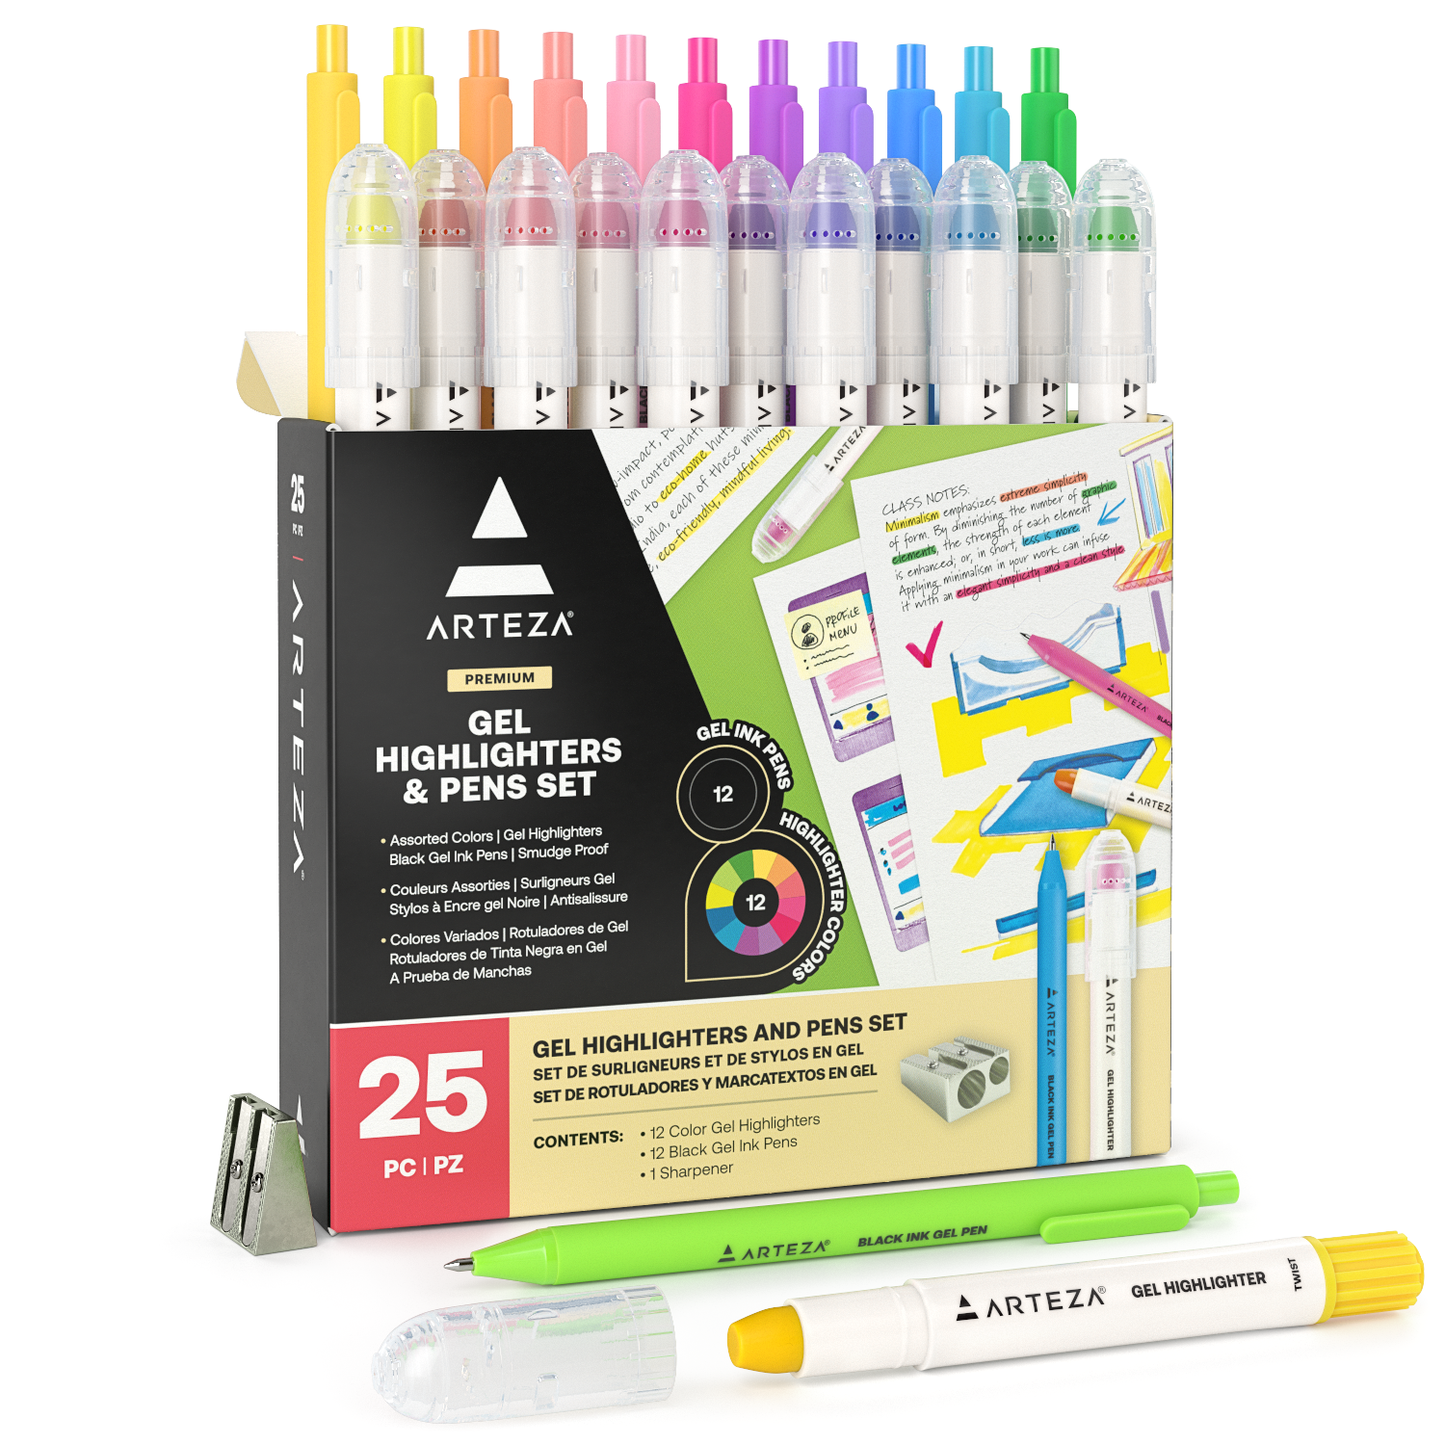  Zebra Pen Lettering Set, Includes 6 Mildliner Highlighters and  6 Brush Pen, Assorted Colors, 12 Pack : Everything Else